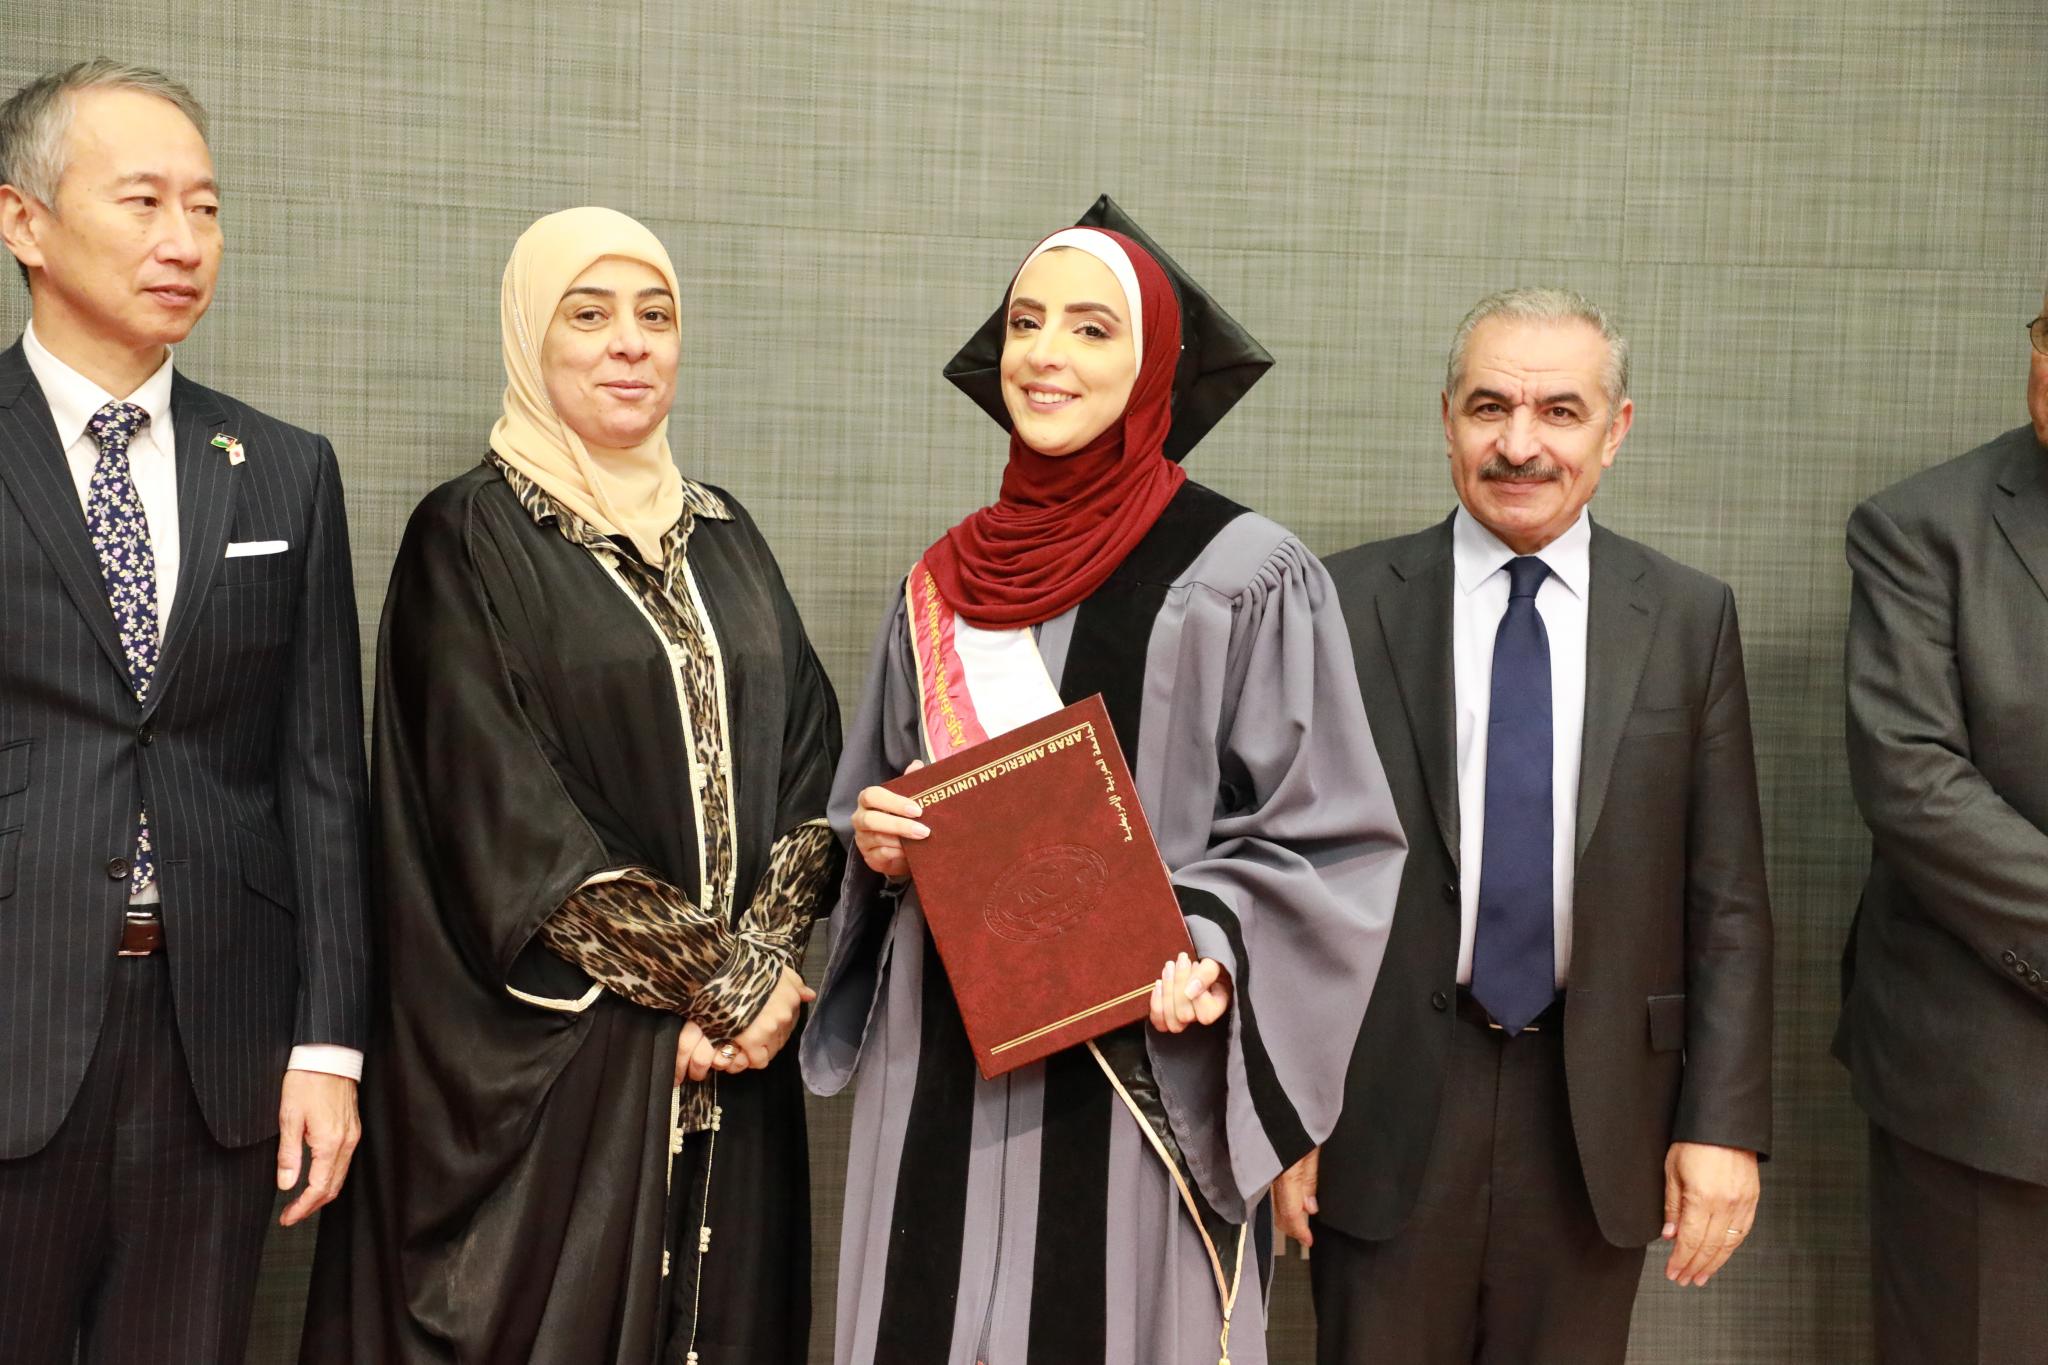 Graduation Ceremony for Master Programs 2018